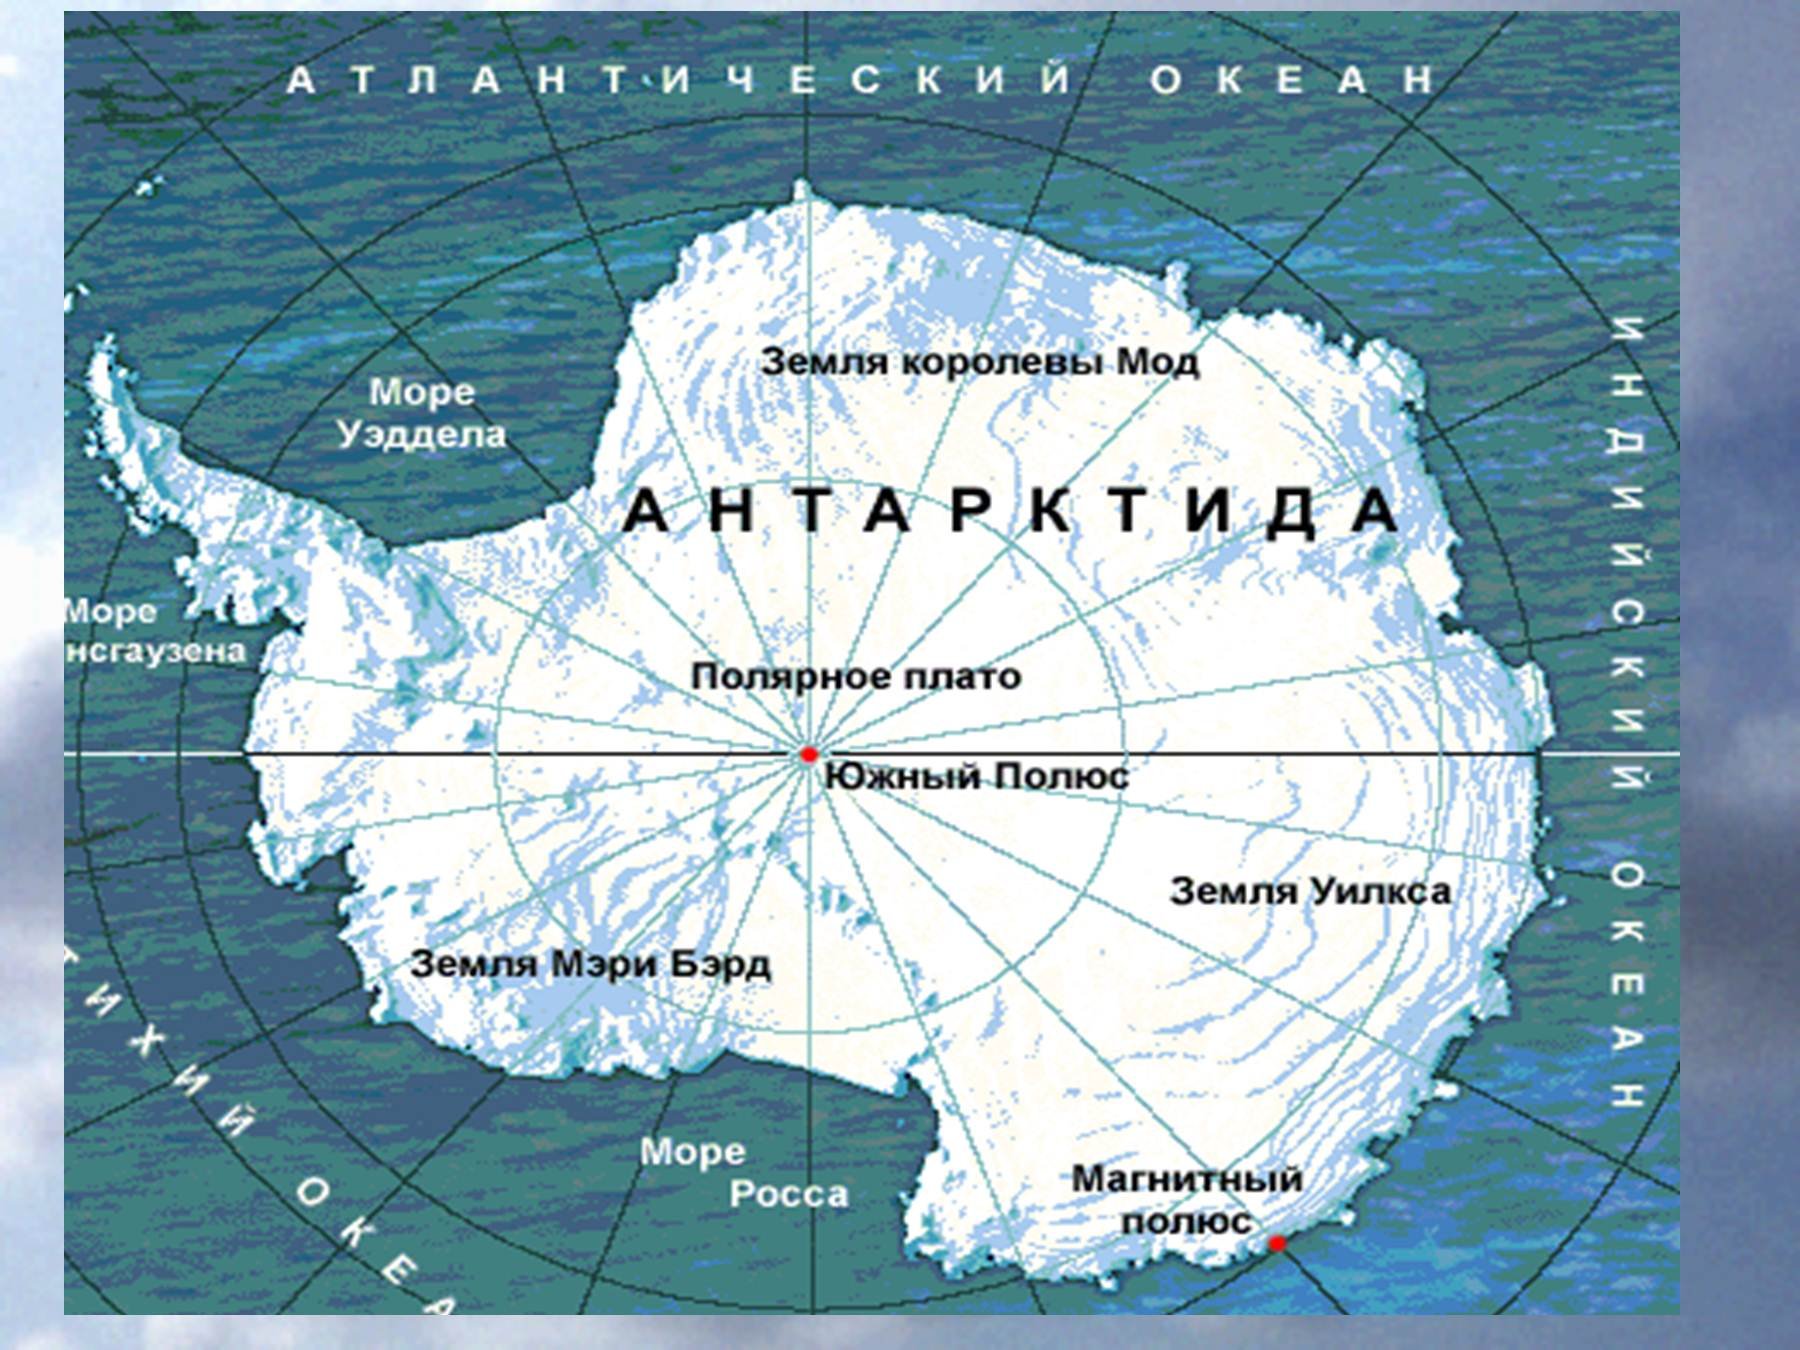 Море росса какой океан. Карта Антарктиды моря омывающие Антарктиду. Антарктида моря Росса Уэдделла Беллинсгаузена Амундсена. Моря: Амундсена, Беллинсгаузена, Росса, Уэдделла..